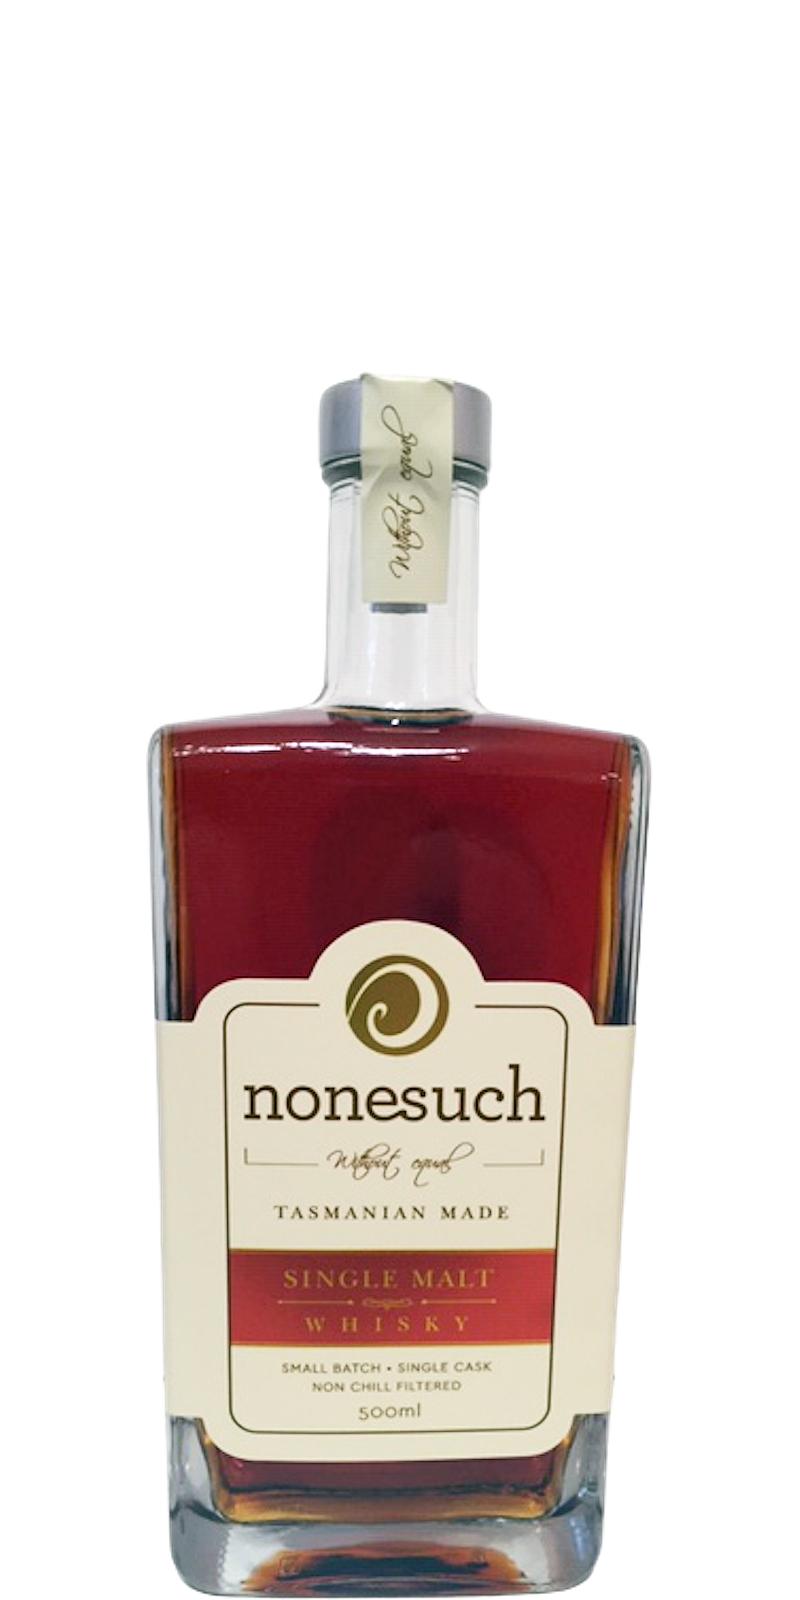 Nonesuch Single Malt Whisky Small Batch Single Cask 48% 500ml